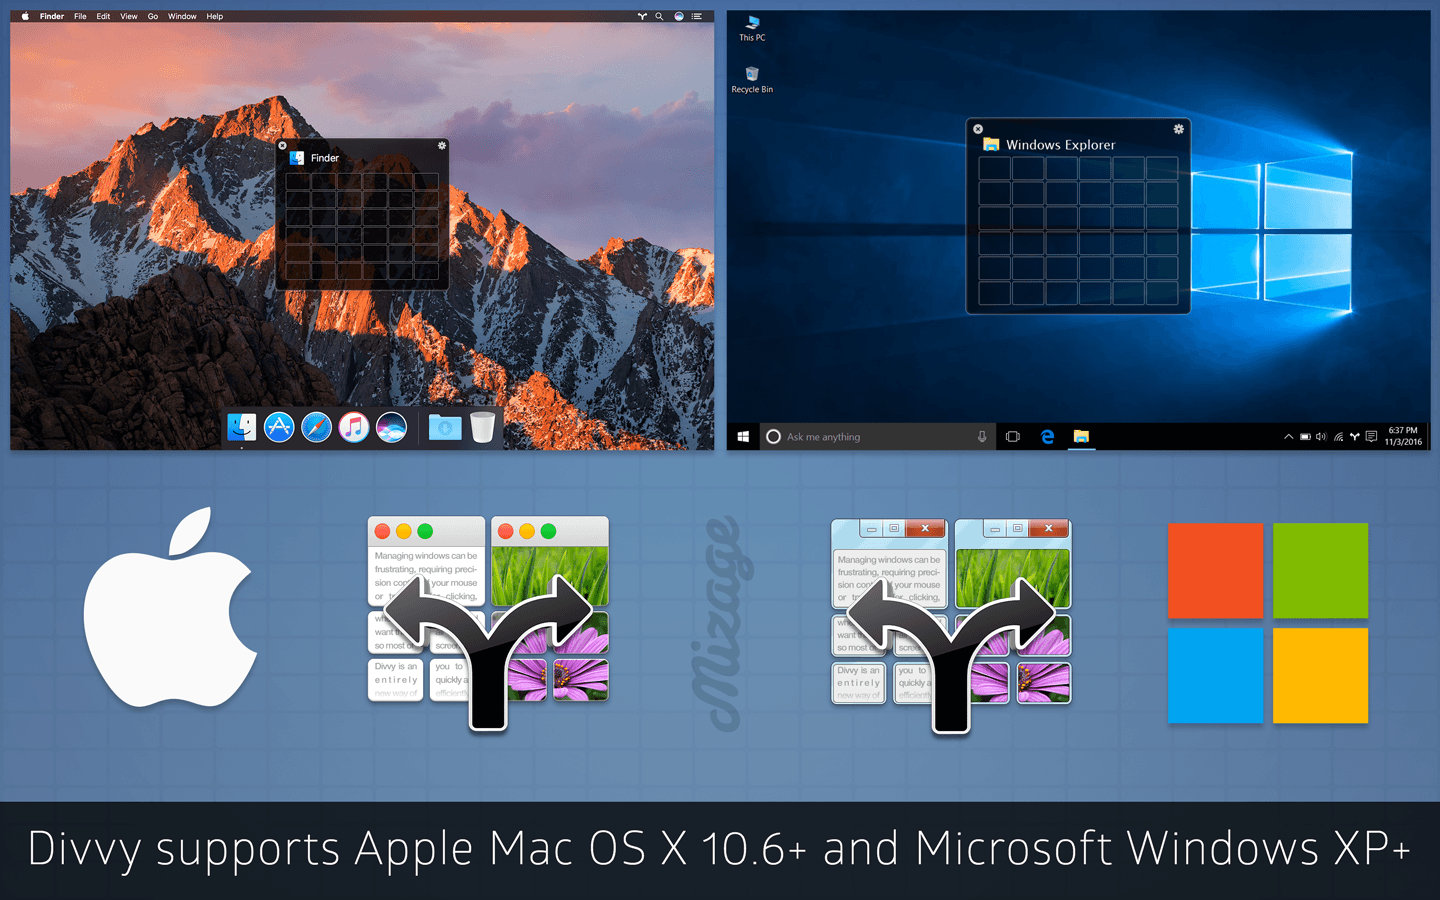 install apk studio device emulator mac osx